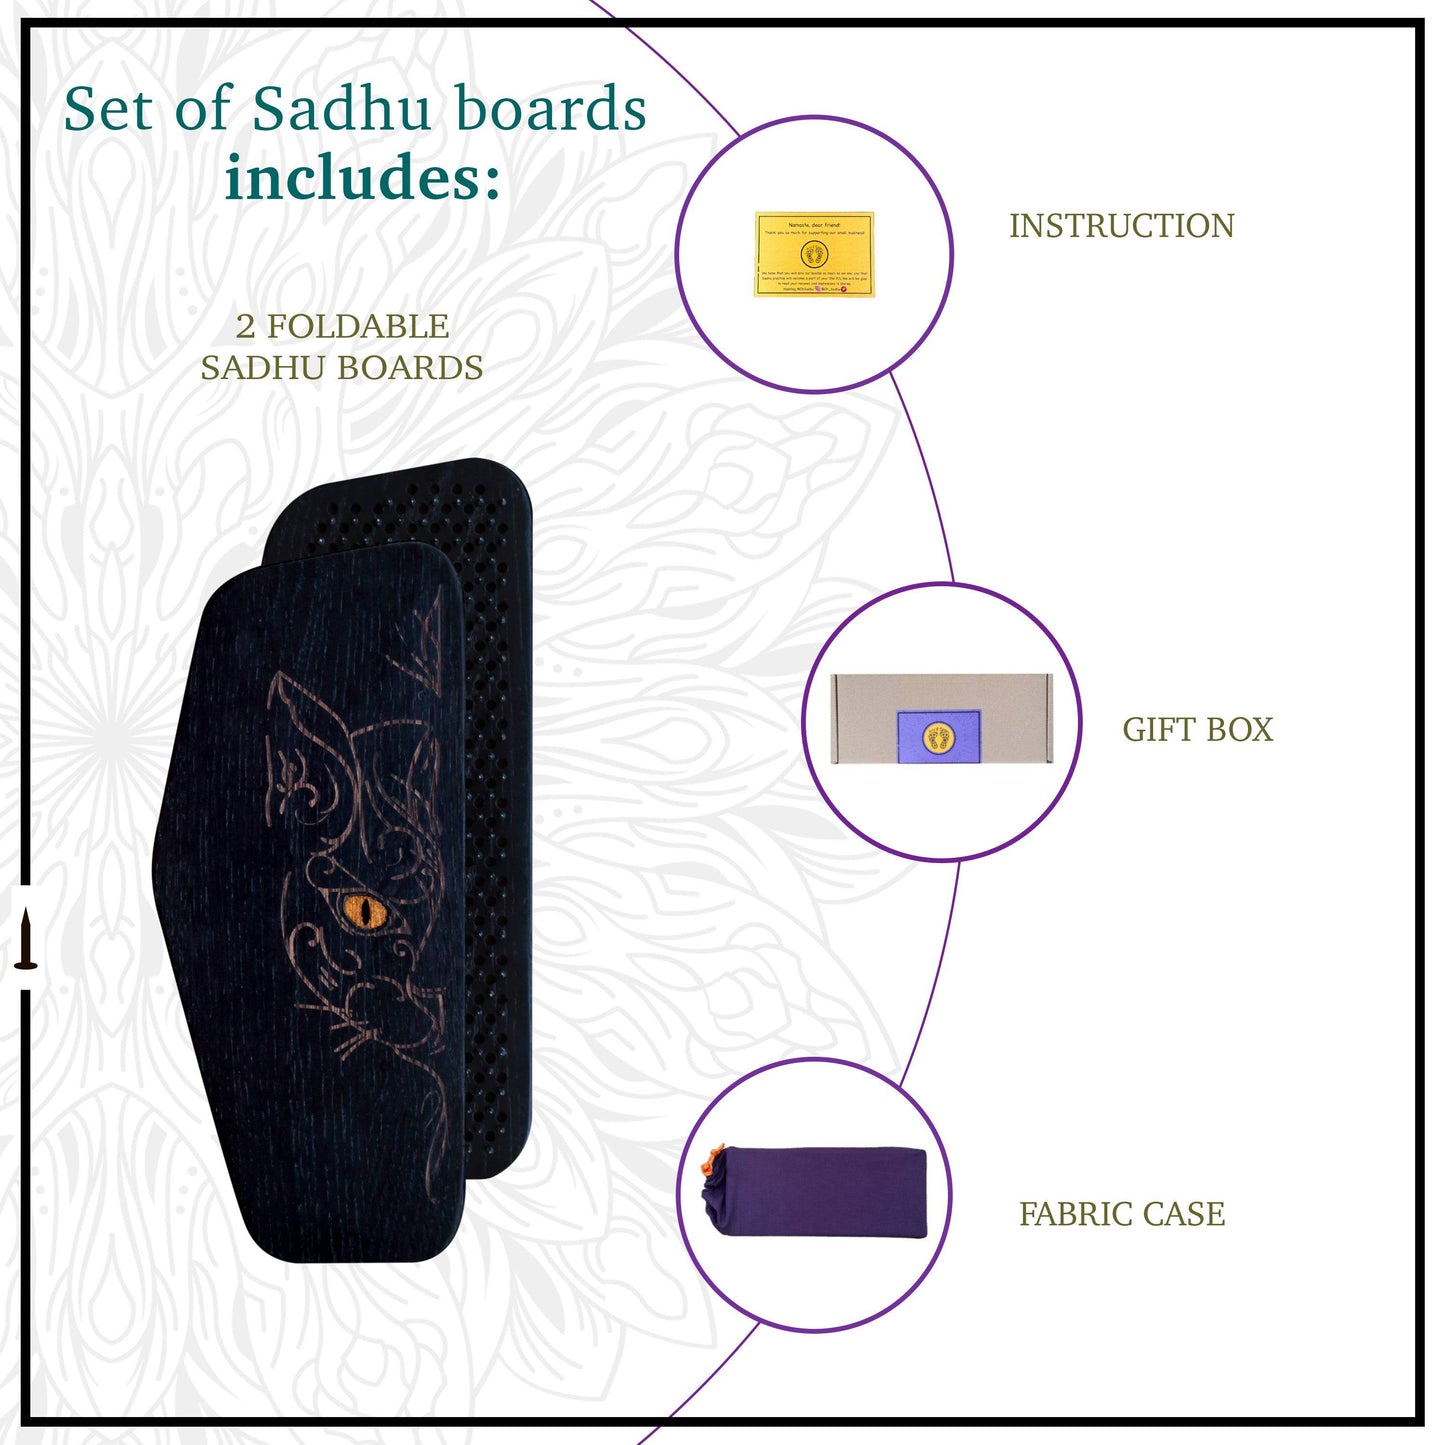 What is included in Sadhu board set Oh! Sadhu